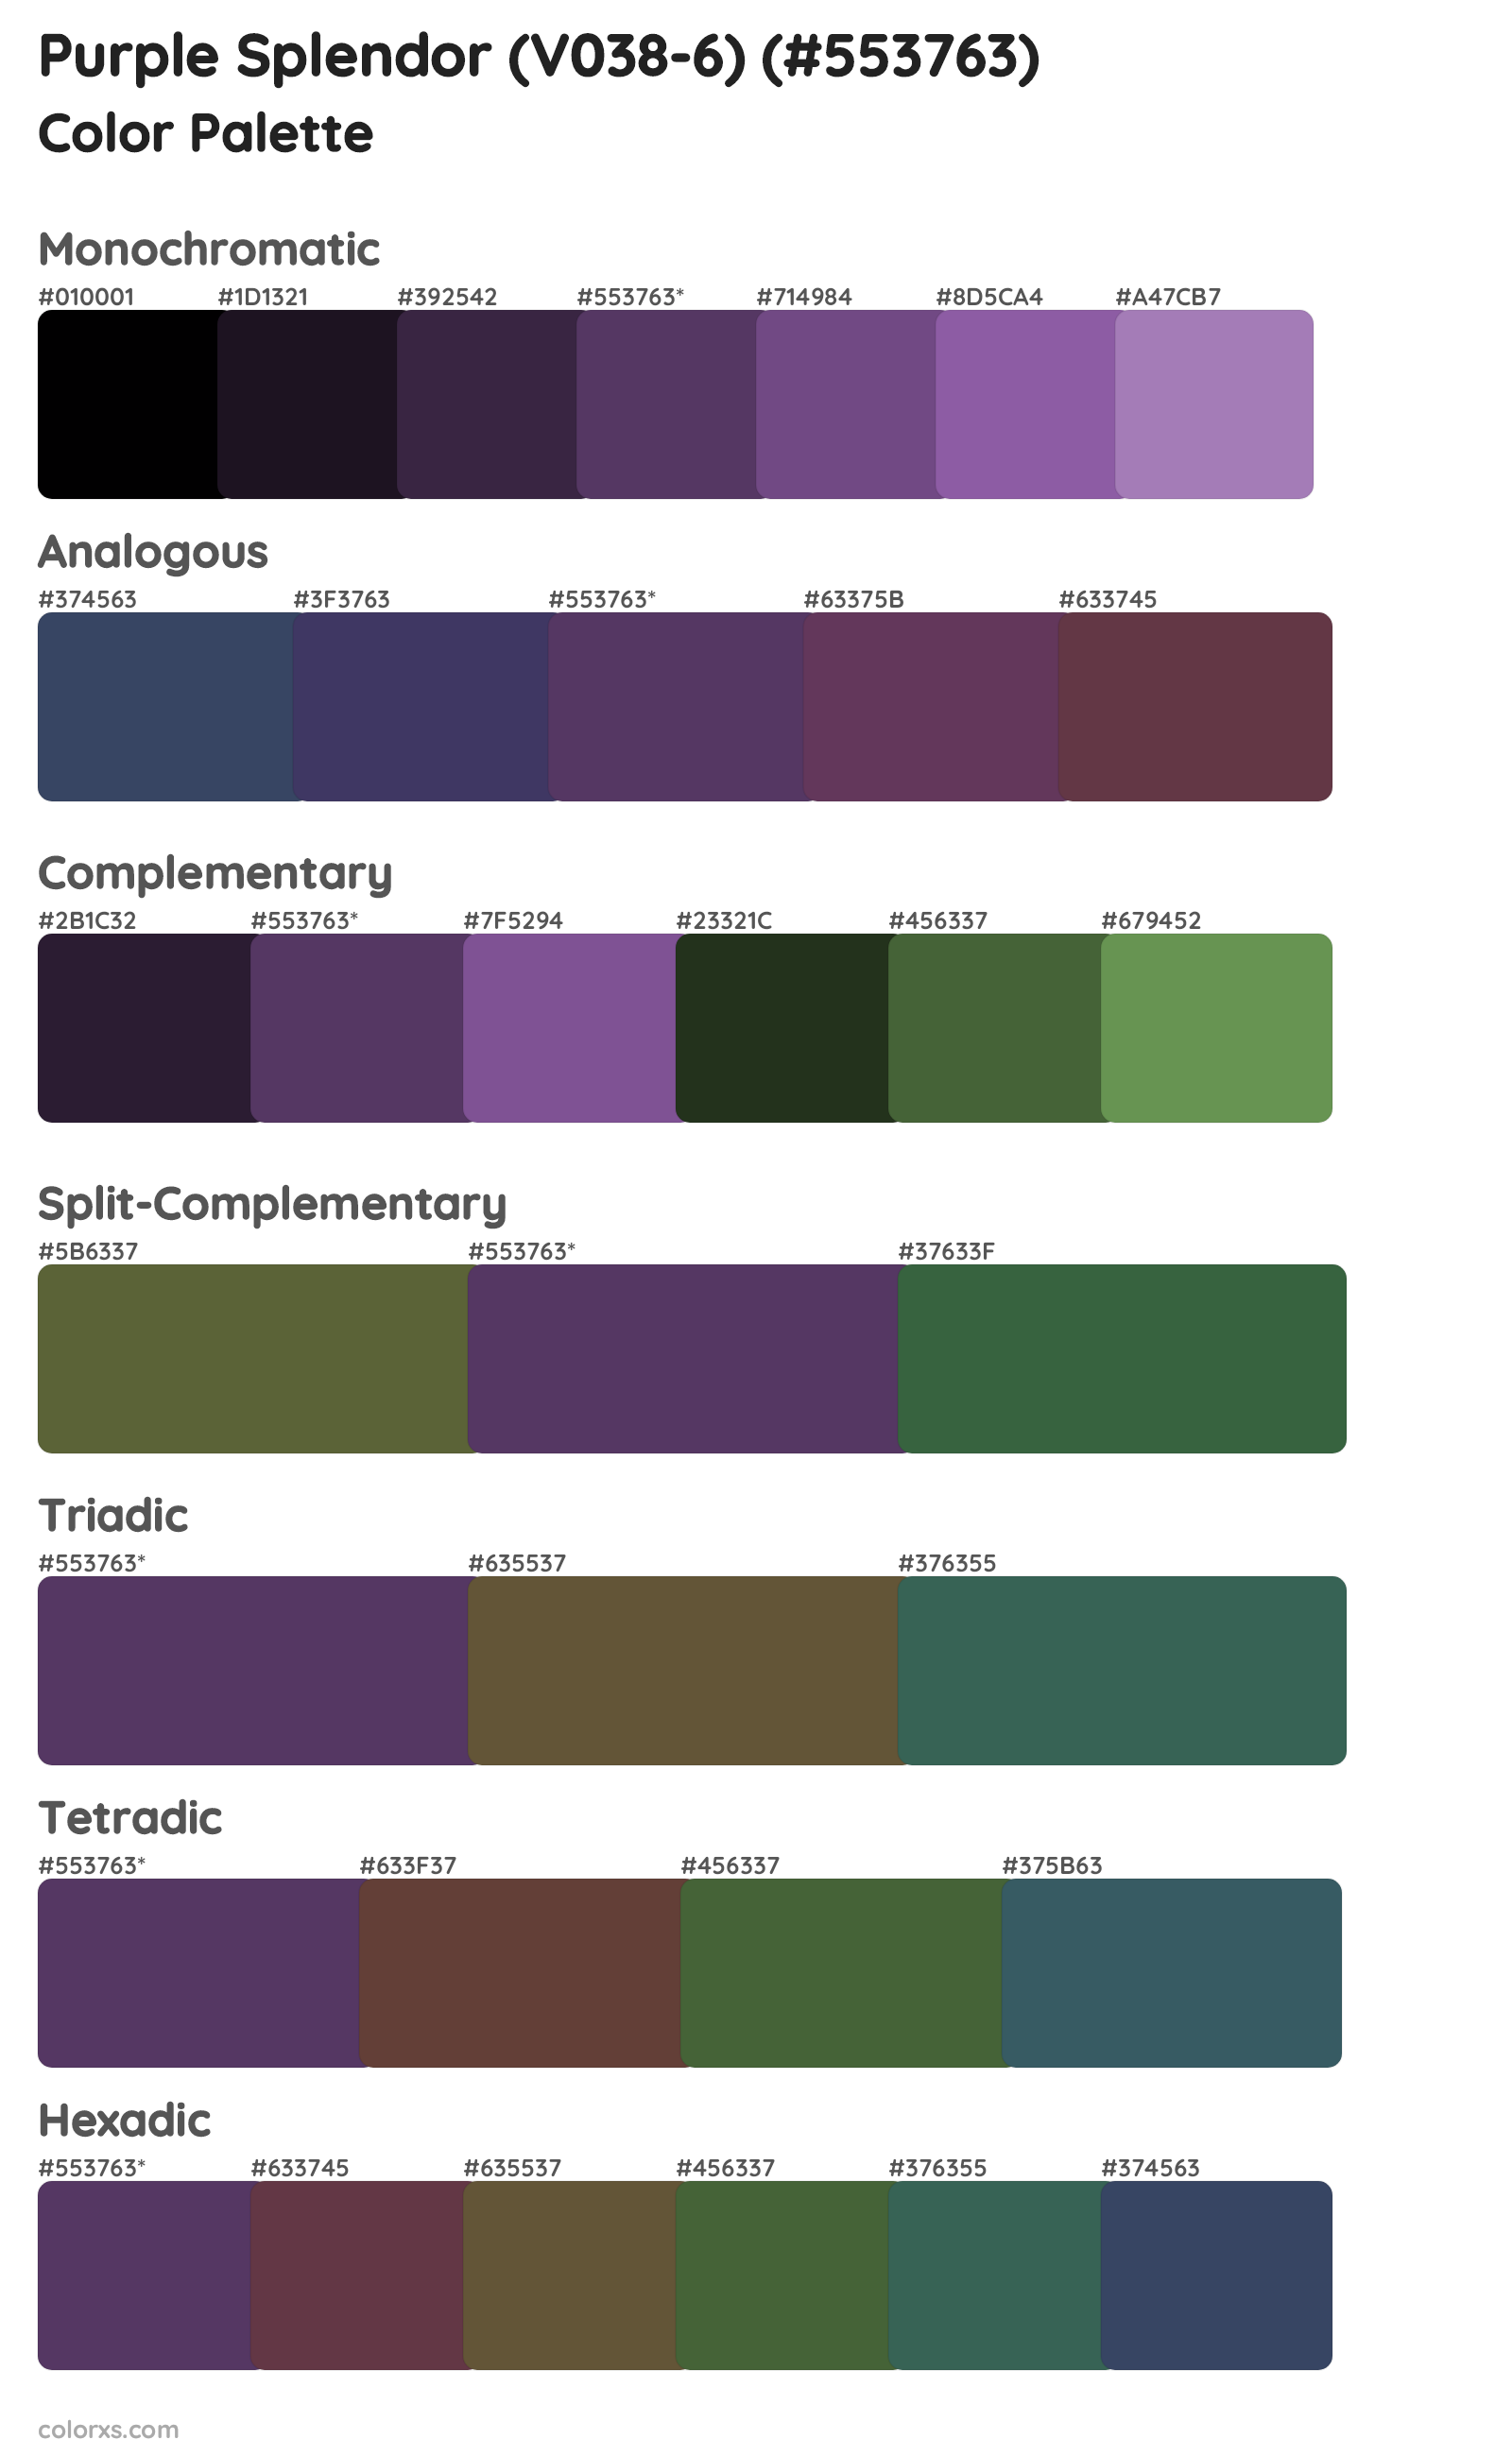 Purple Splendor (V038-6) Color Scheme Palettes